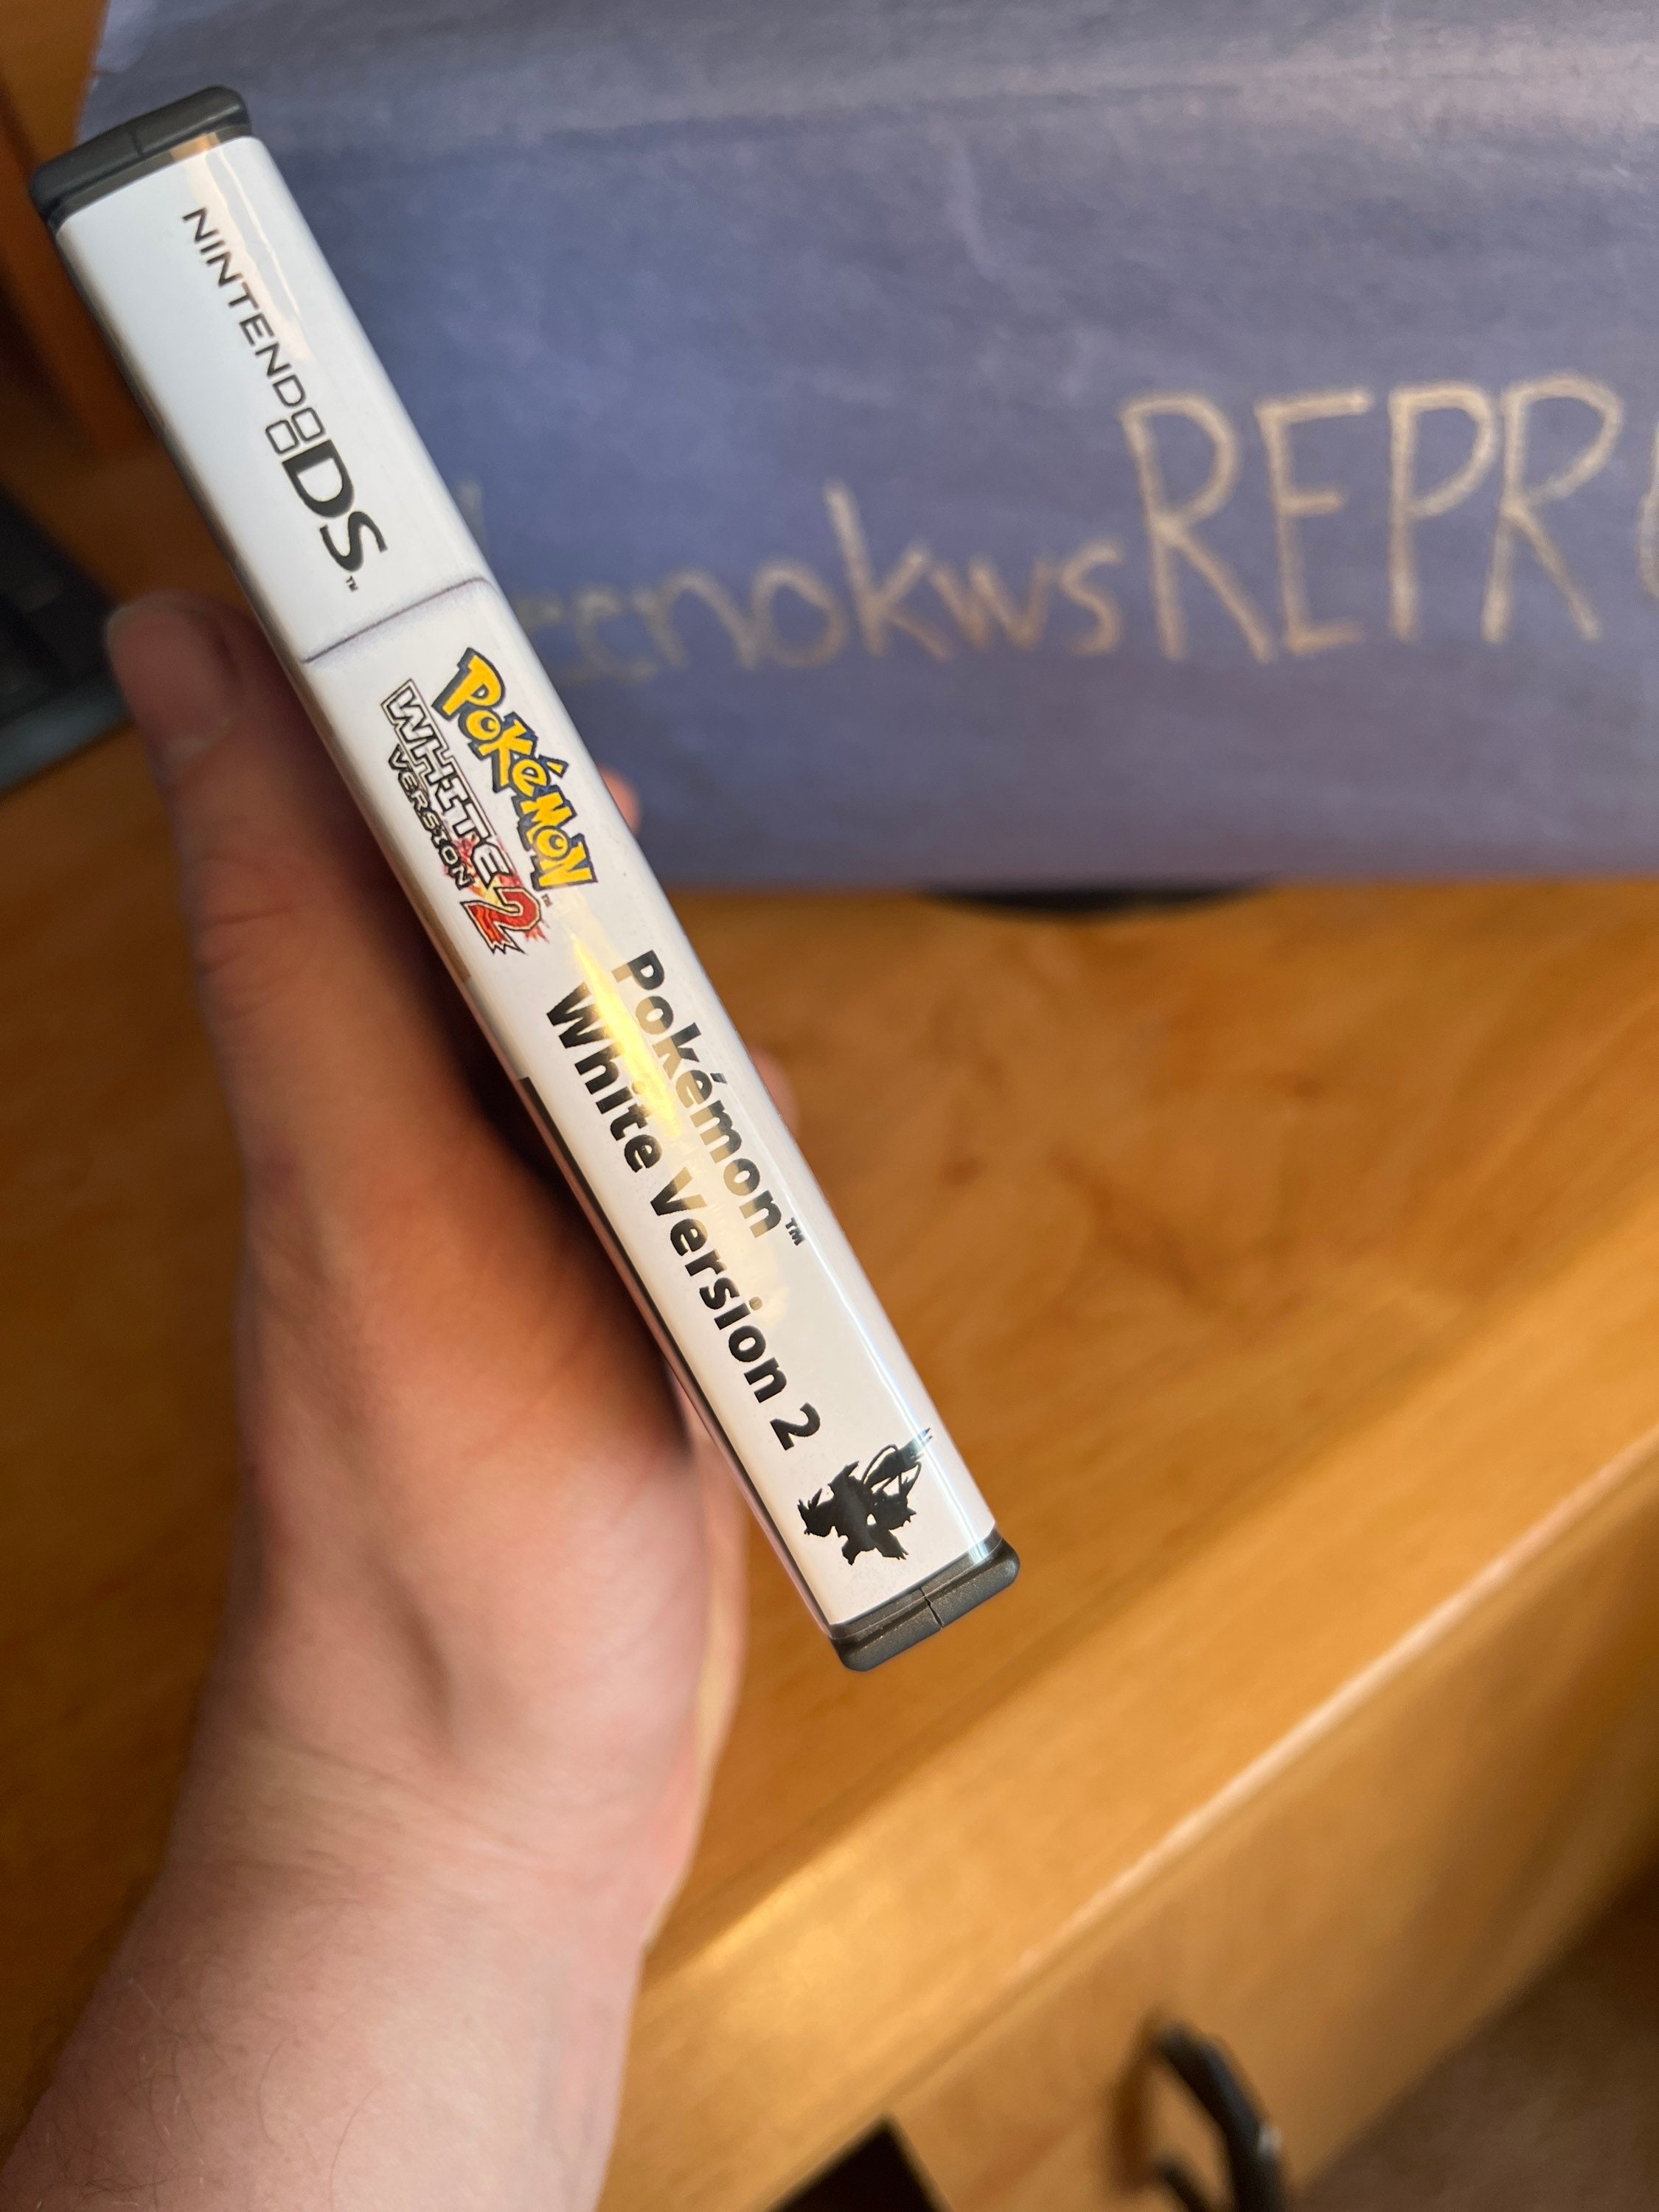 Pokémon White 2 Box and Manual : r/gameverifying